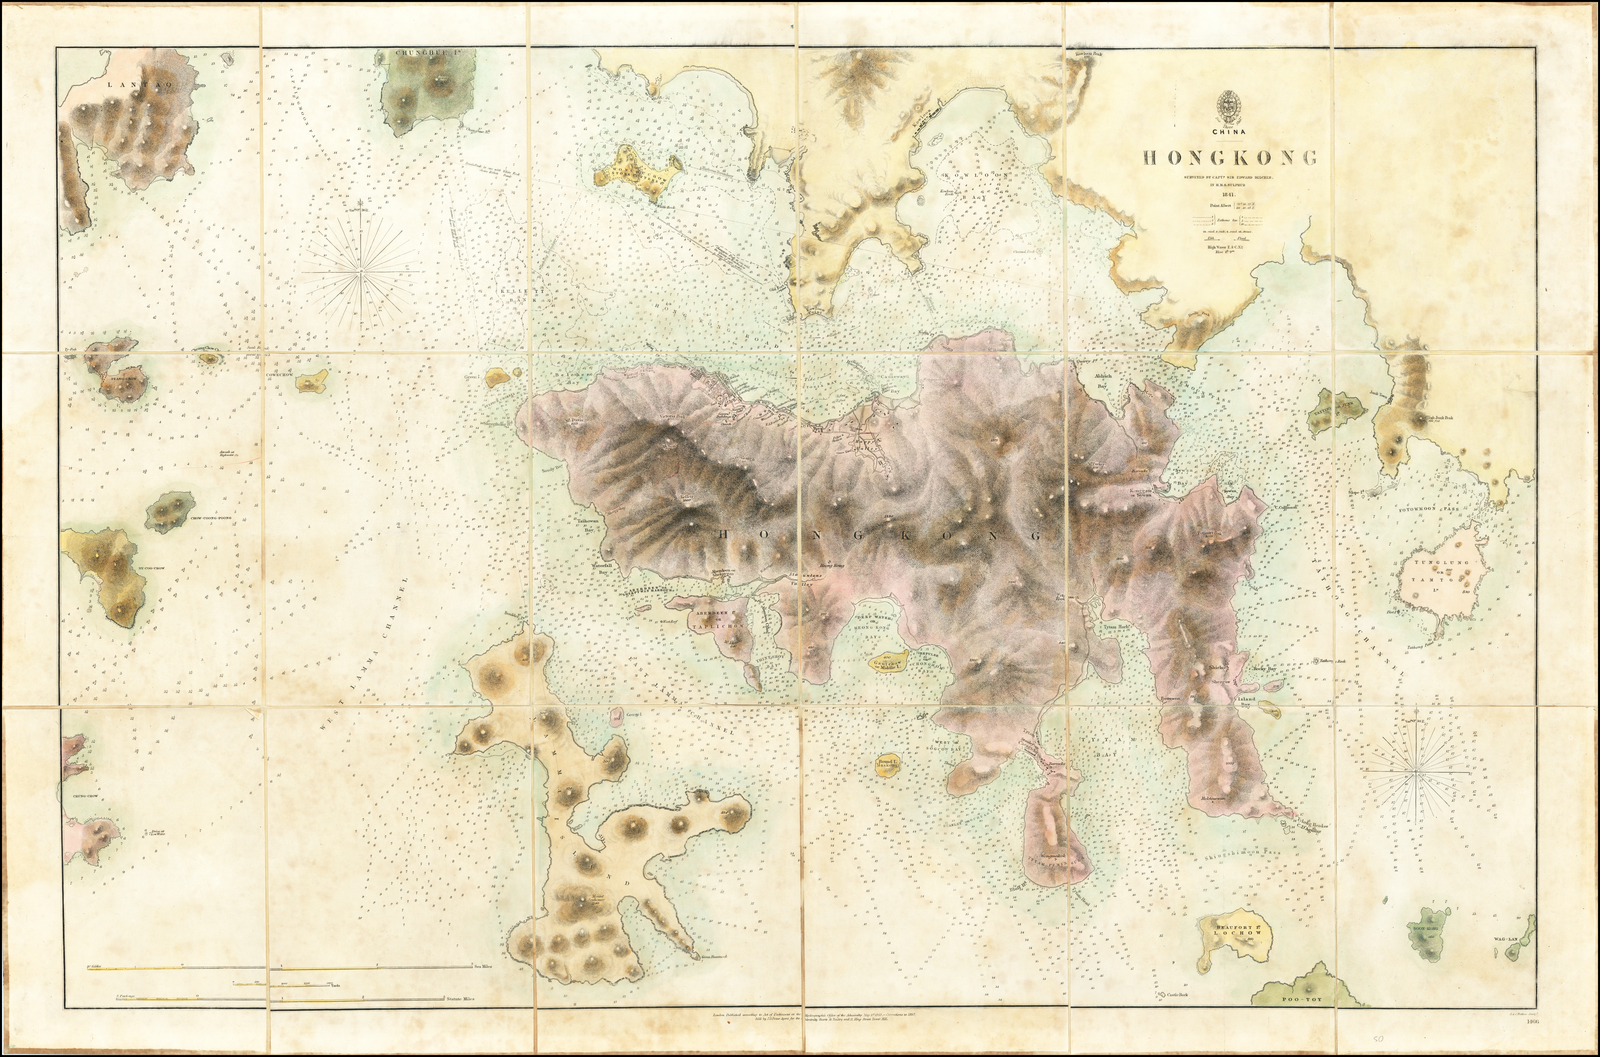 Hong Kong surveyed by Captn. Sir Edward Belcher, in H.M.S. Sulphur 1841